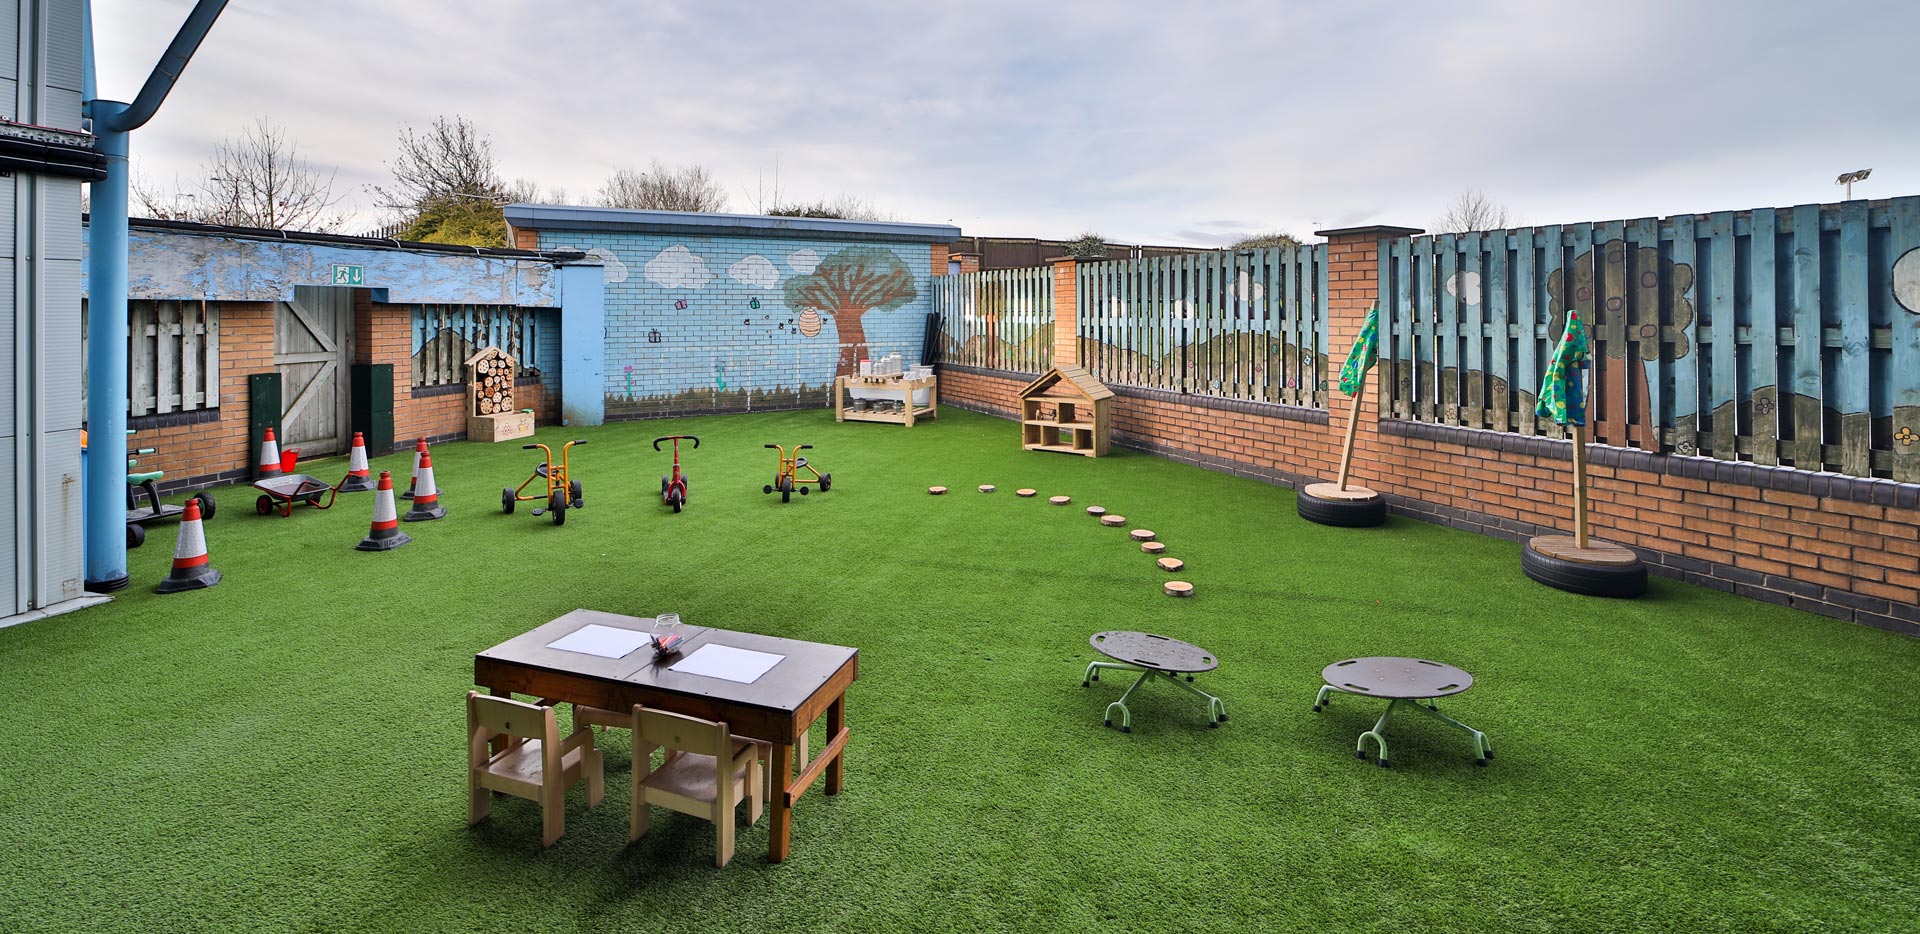 Bright Horizons Kirkby Day Nursery and Preschool